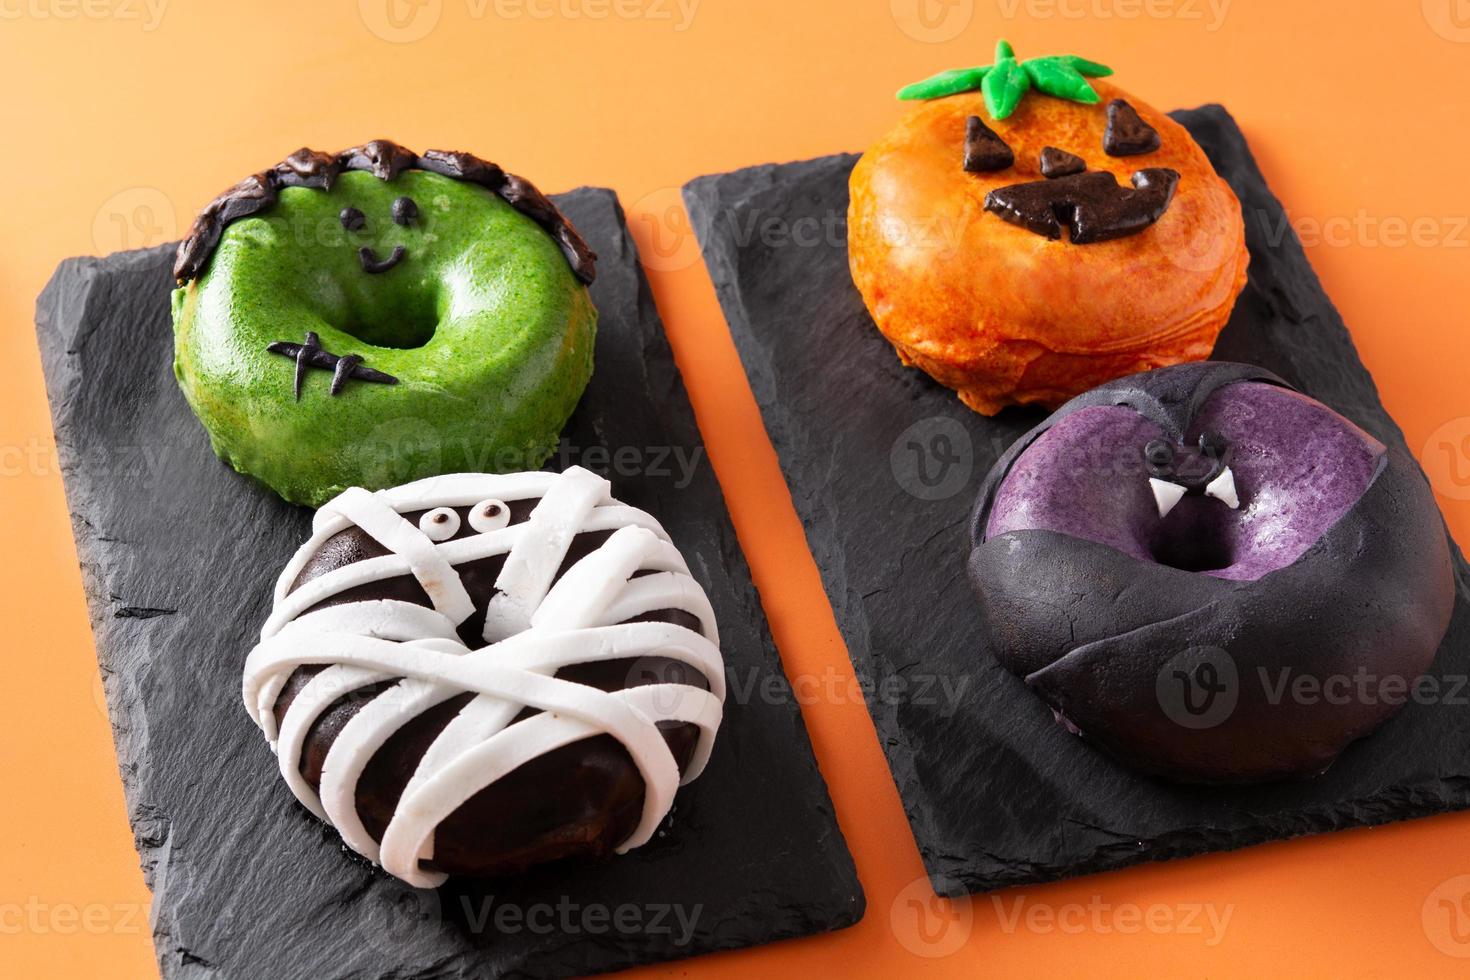 Assortmen of Halloween donuts photo